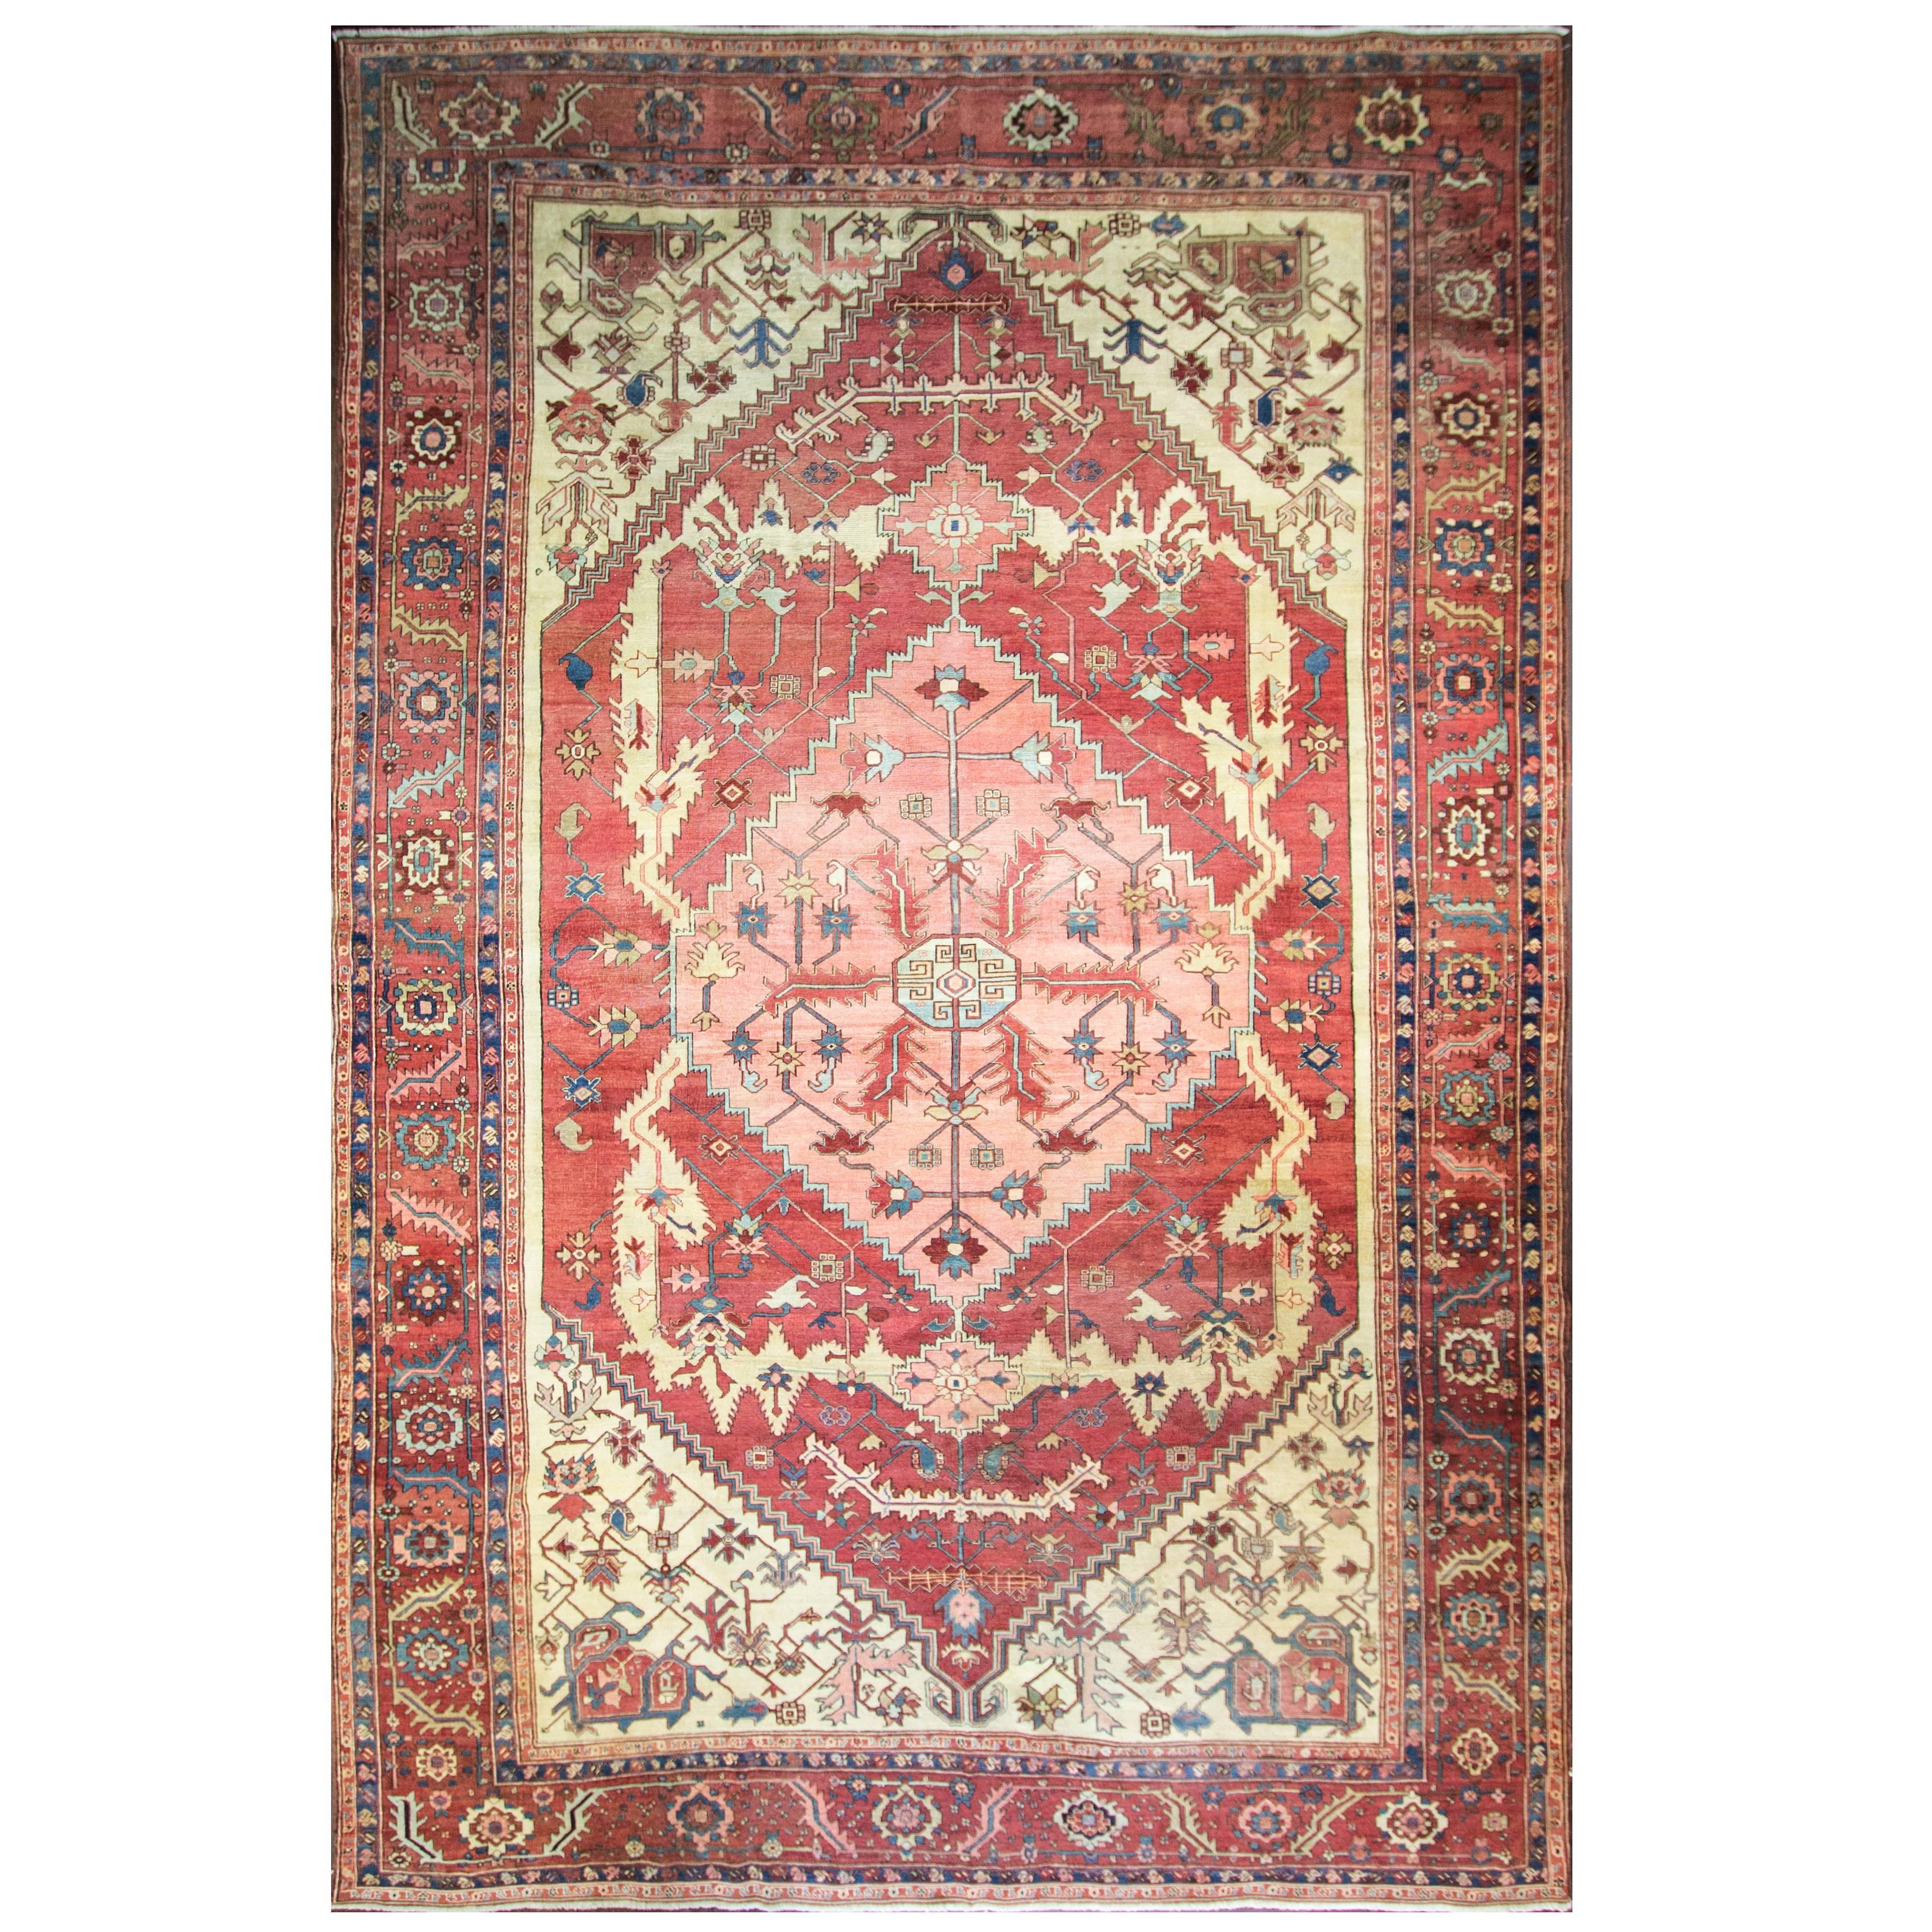 Spectacular Antique Serapi Carpet For Sale